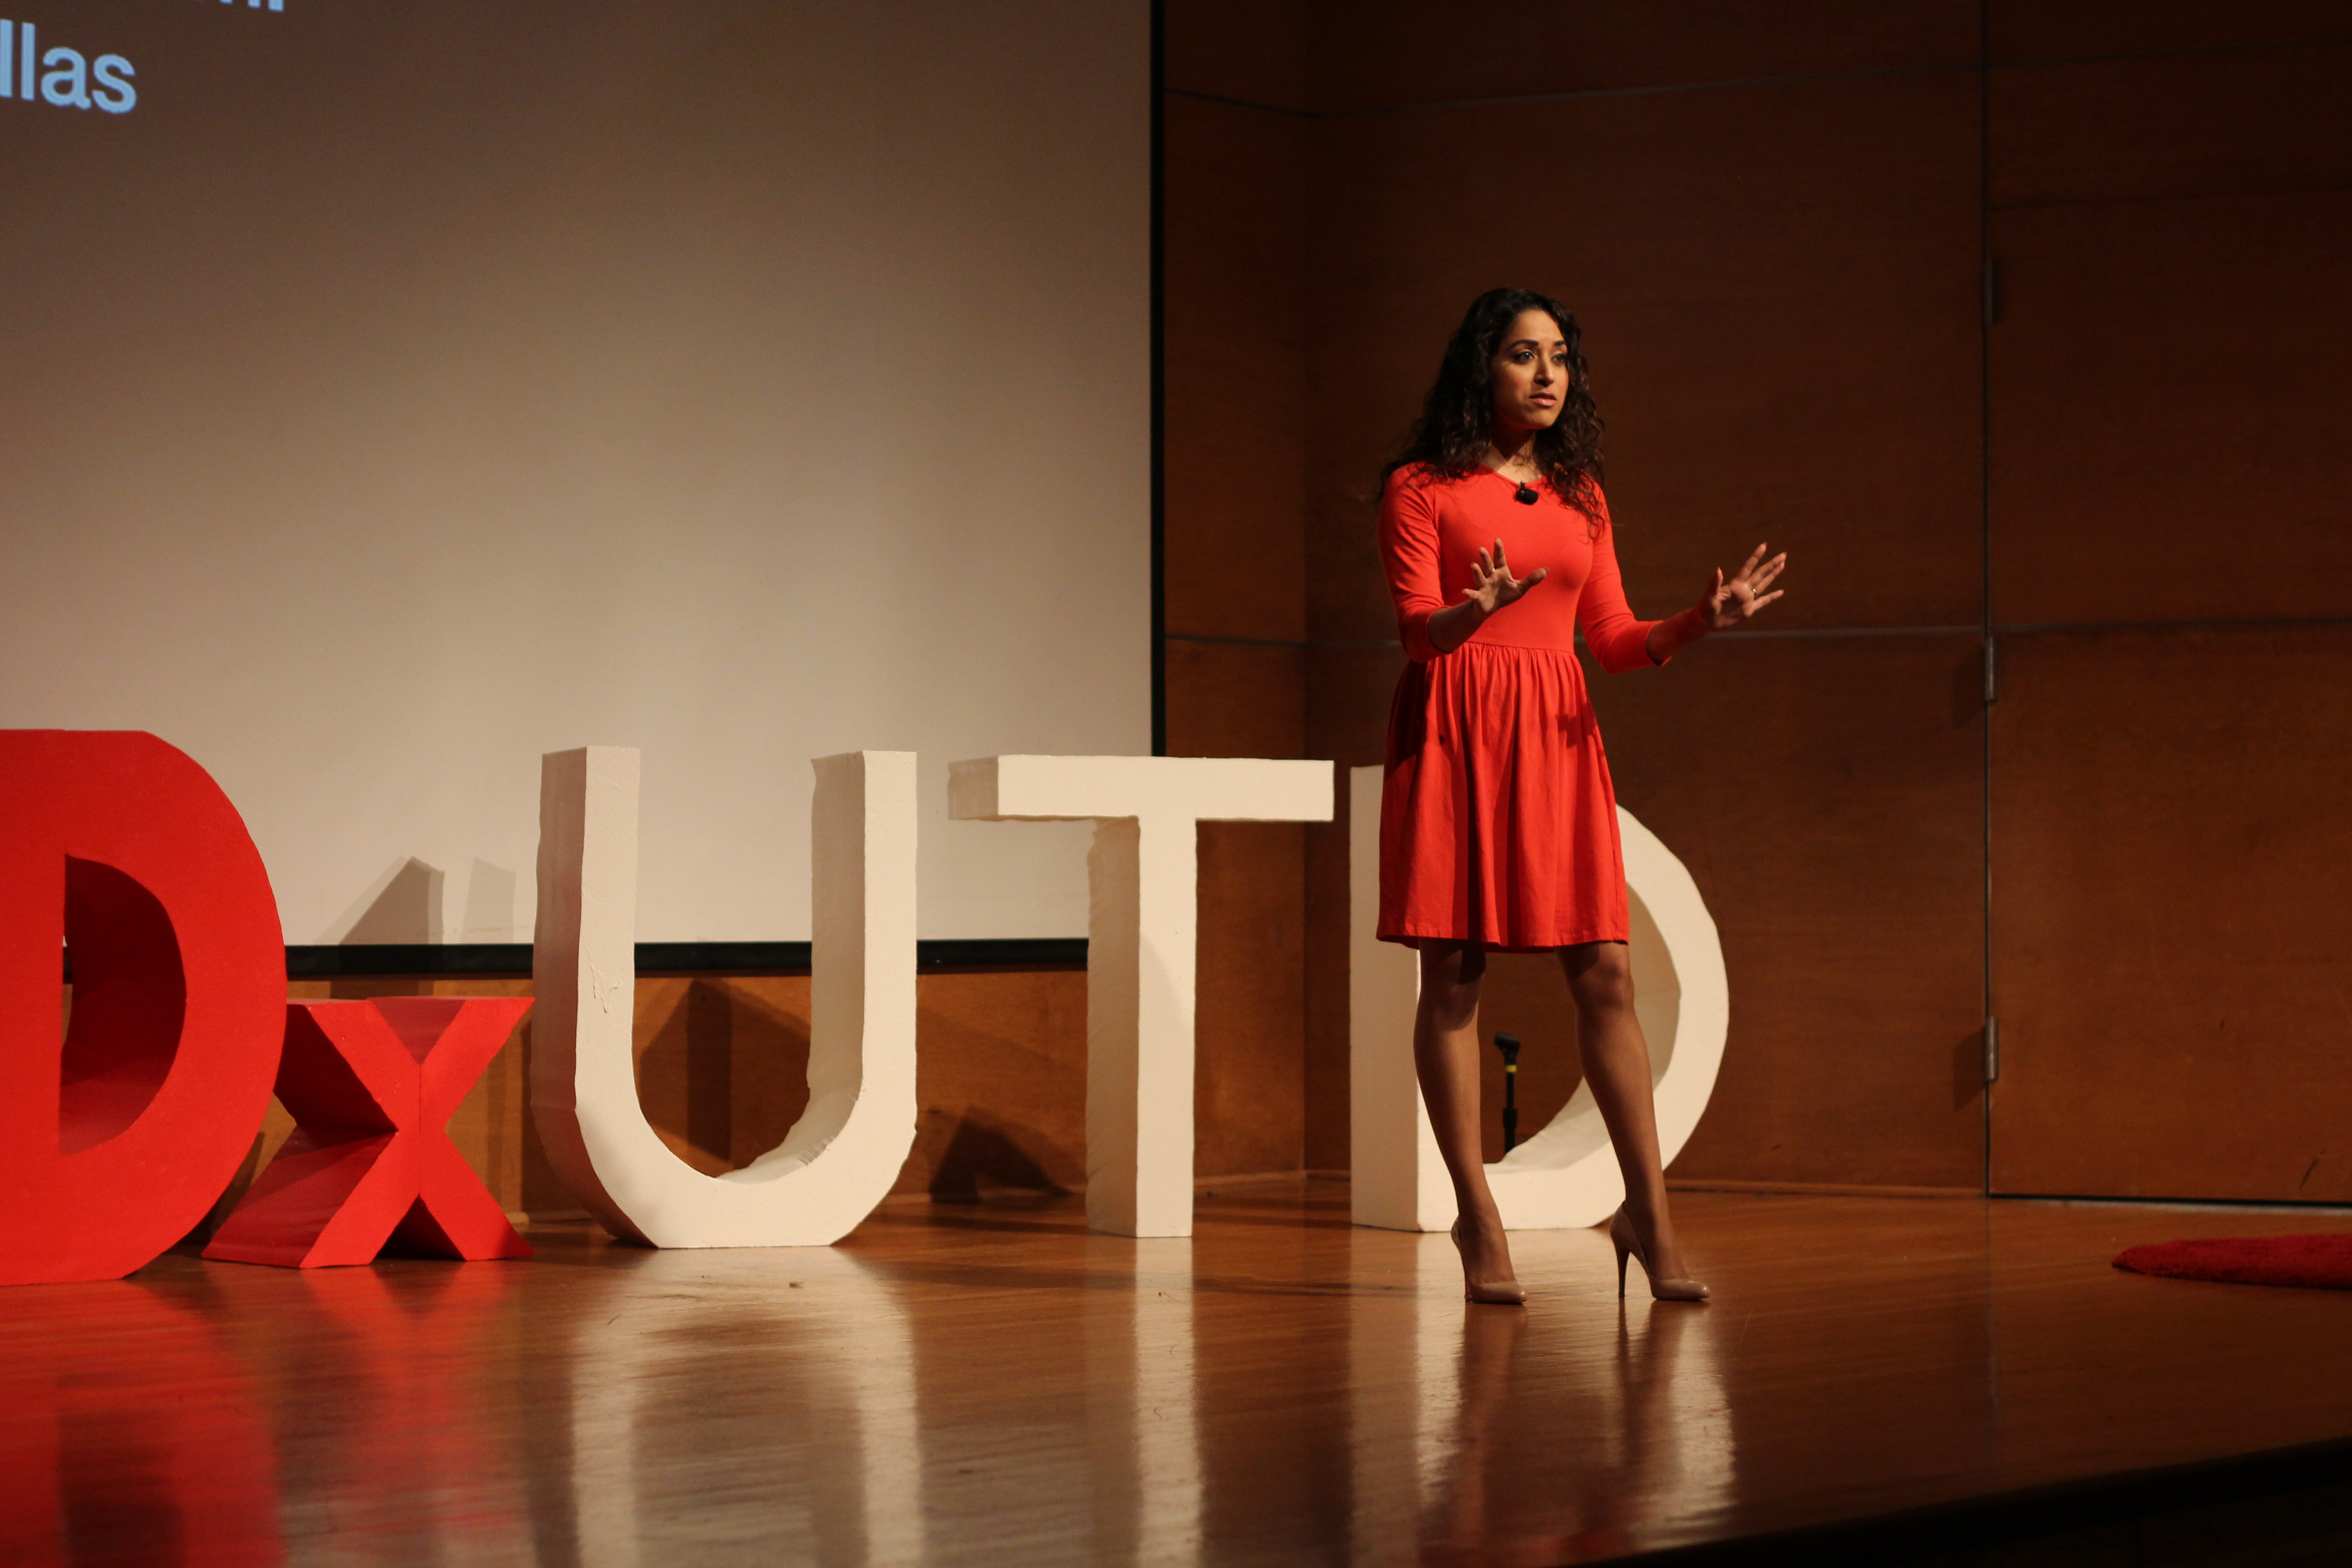 TedxUTD brings together myriad of experts